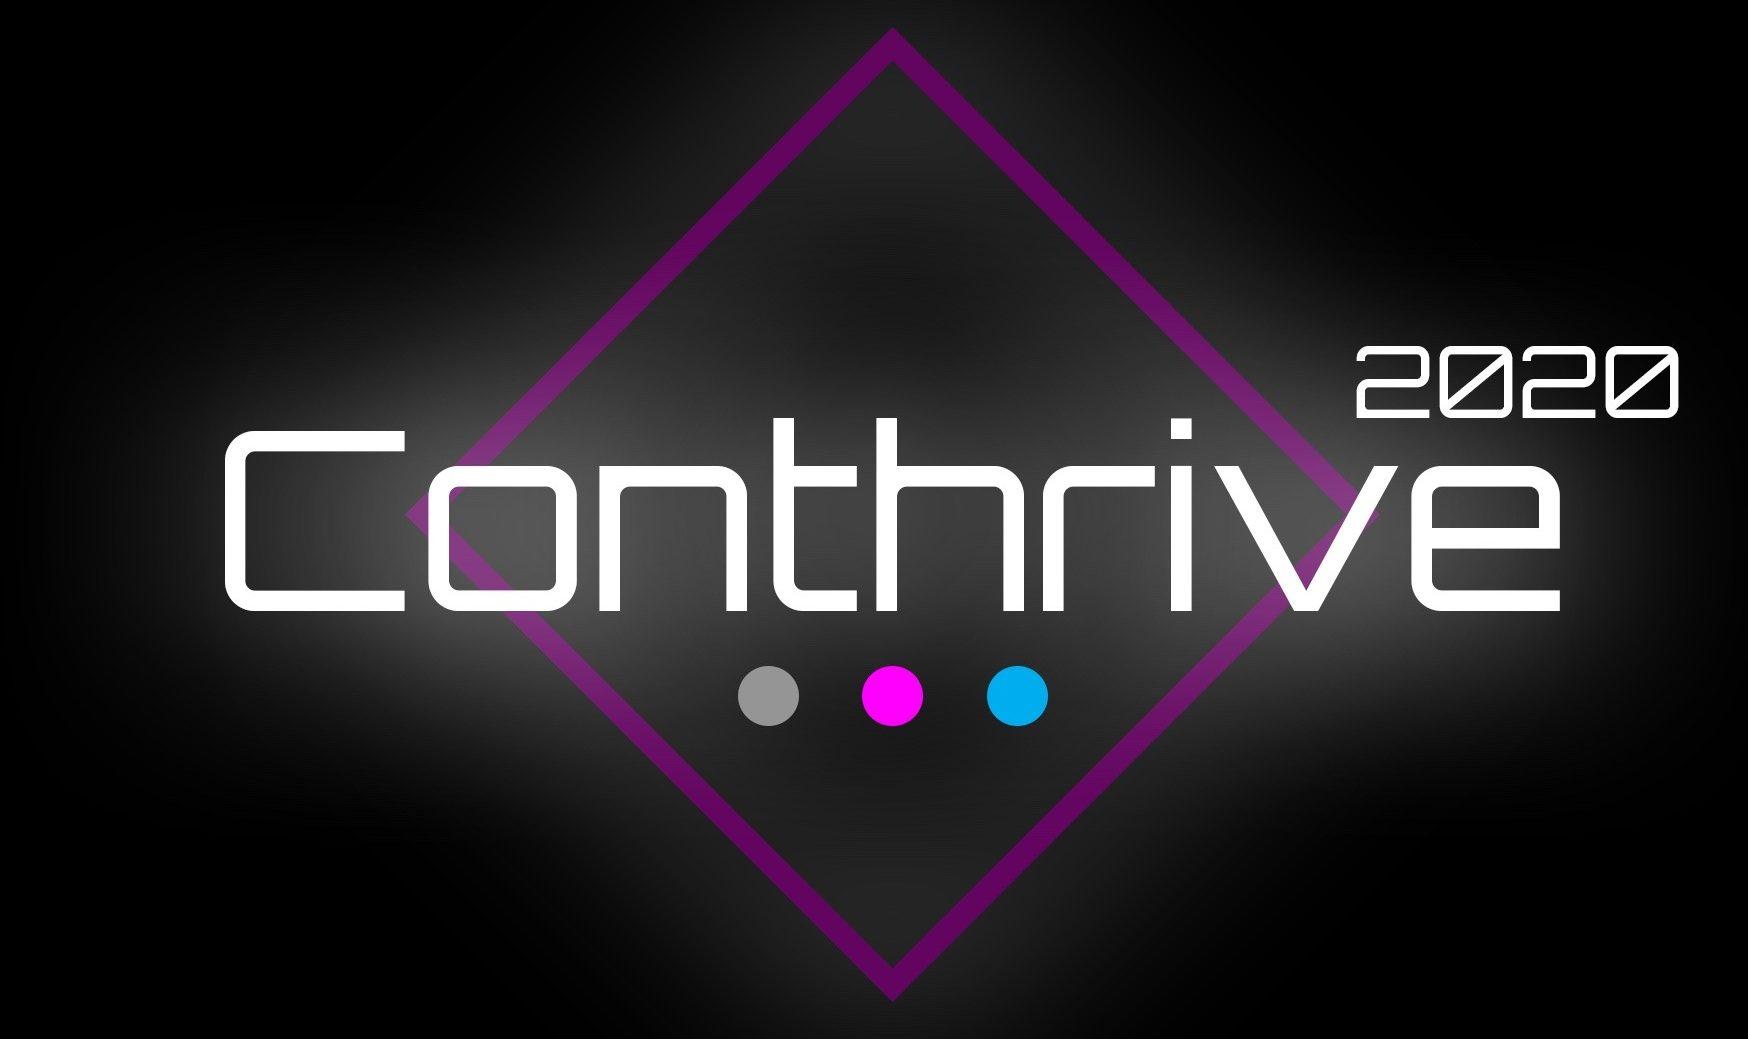 29.11.2019 Conthrive 2020 kaupunkihackathonin launch (Jkl)